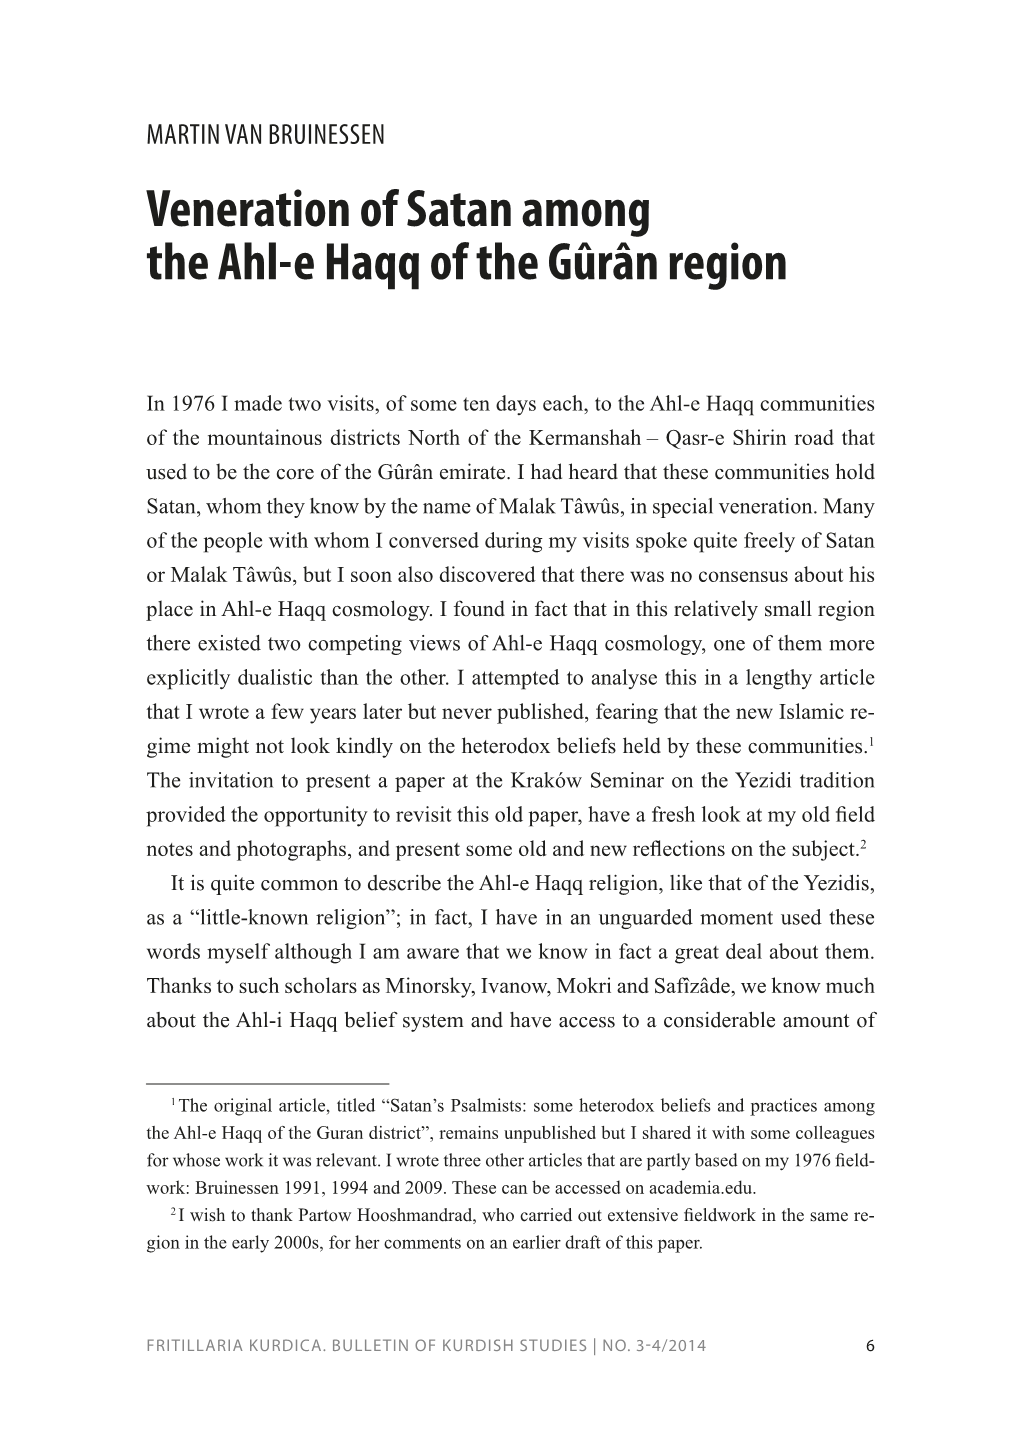 Veneration of Satan Among the Ahl-E Haqq of the Gûrân Region